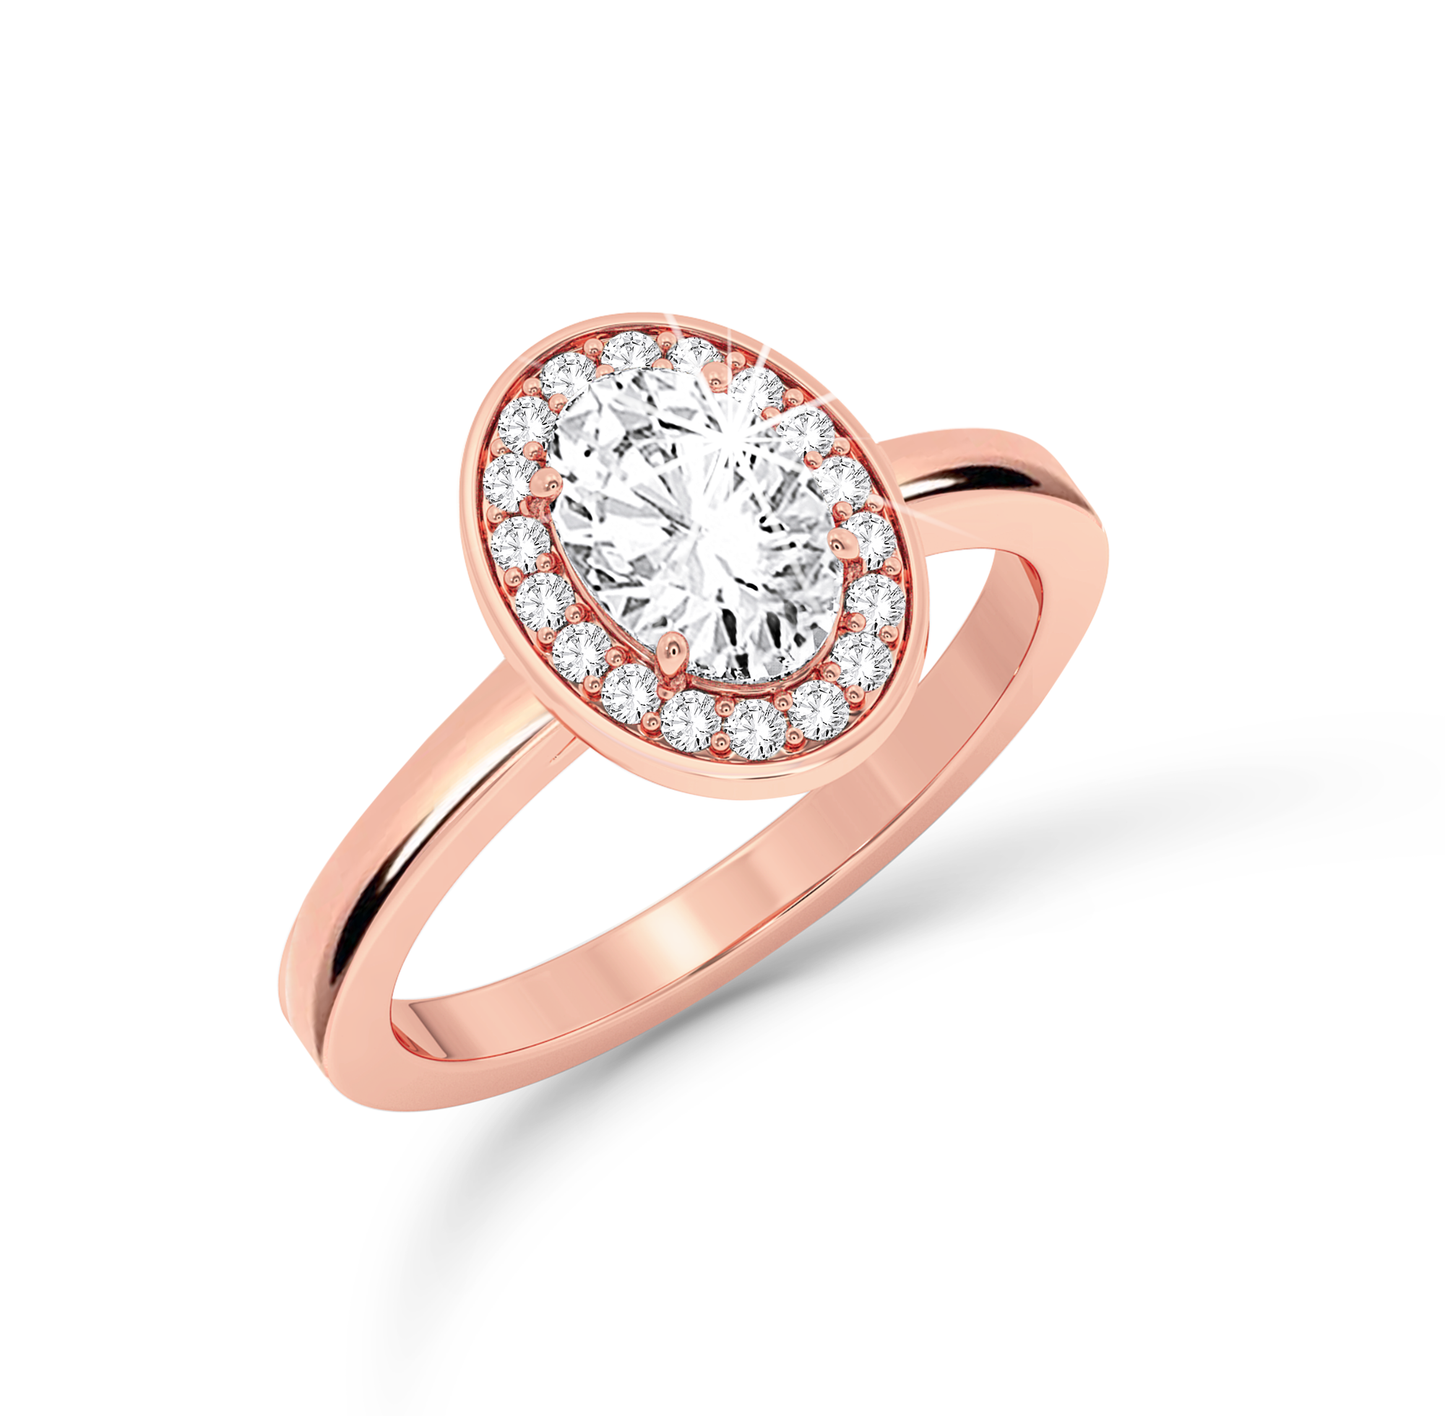 Oval Diamond Ring with halo - Rose Gold - Bodega